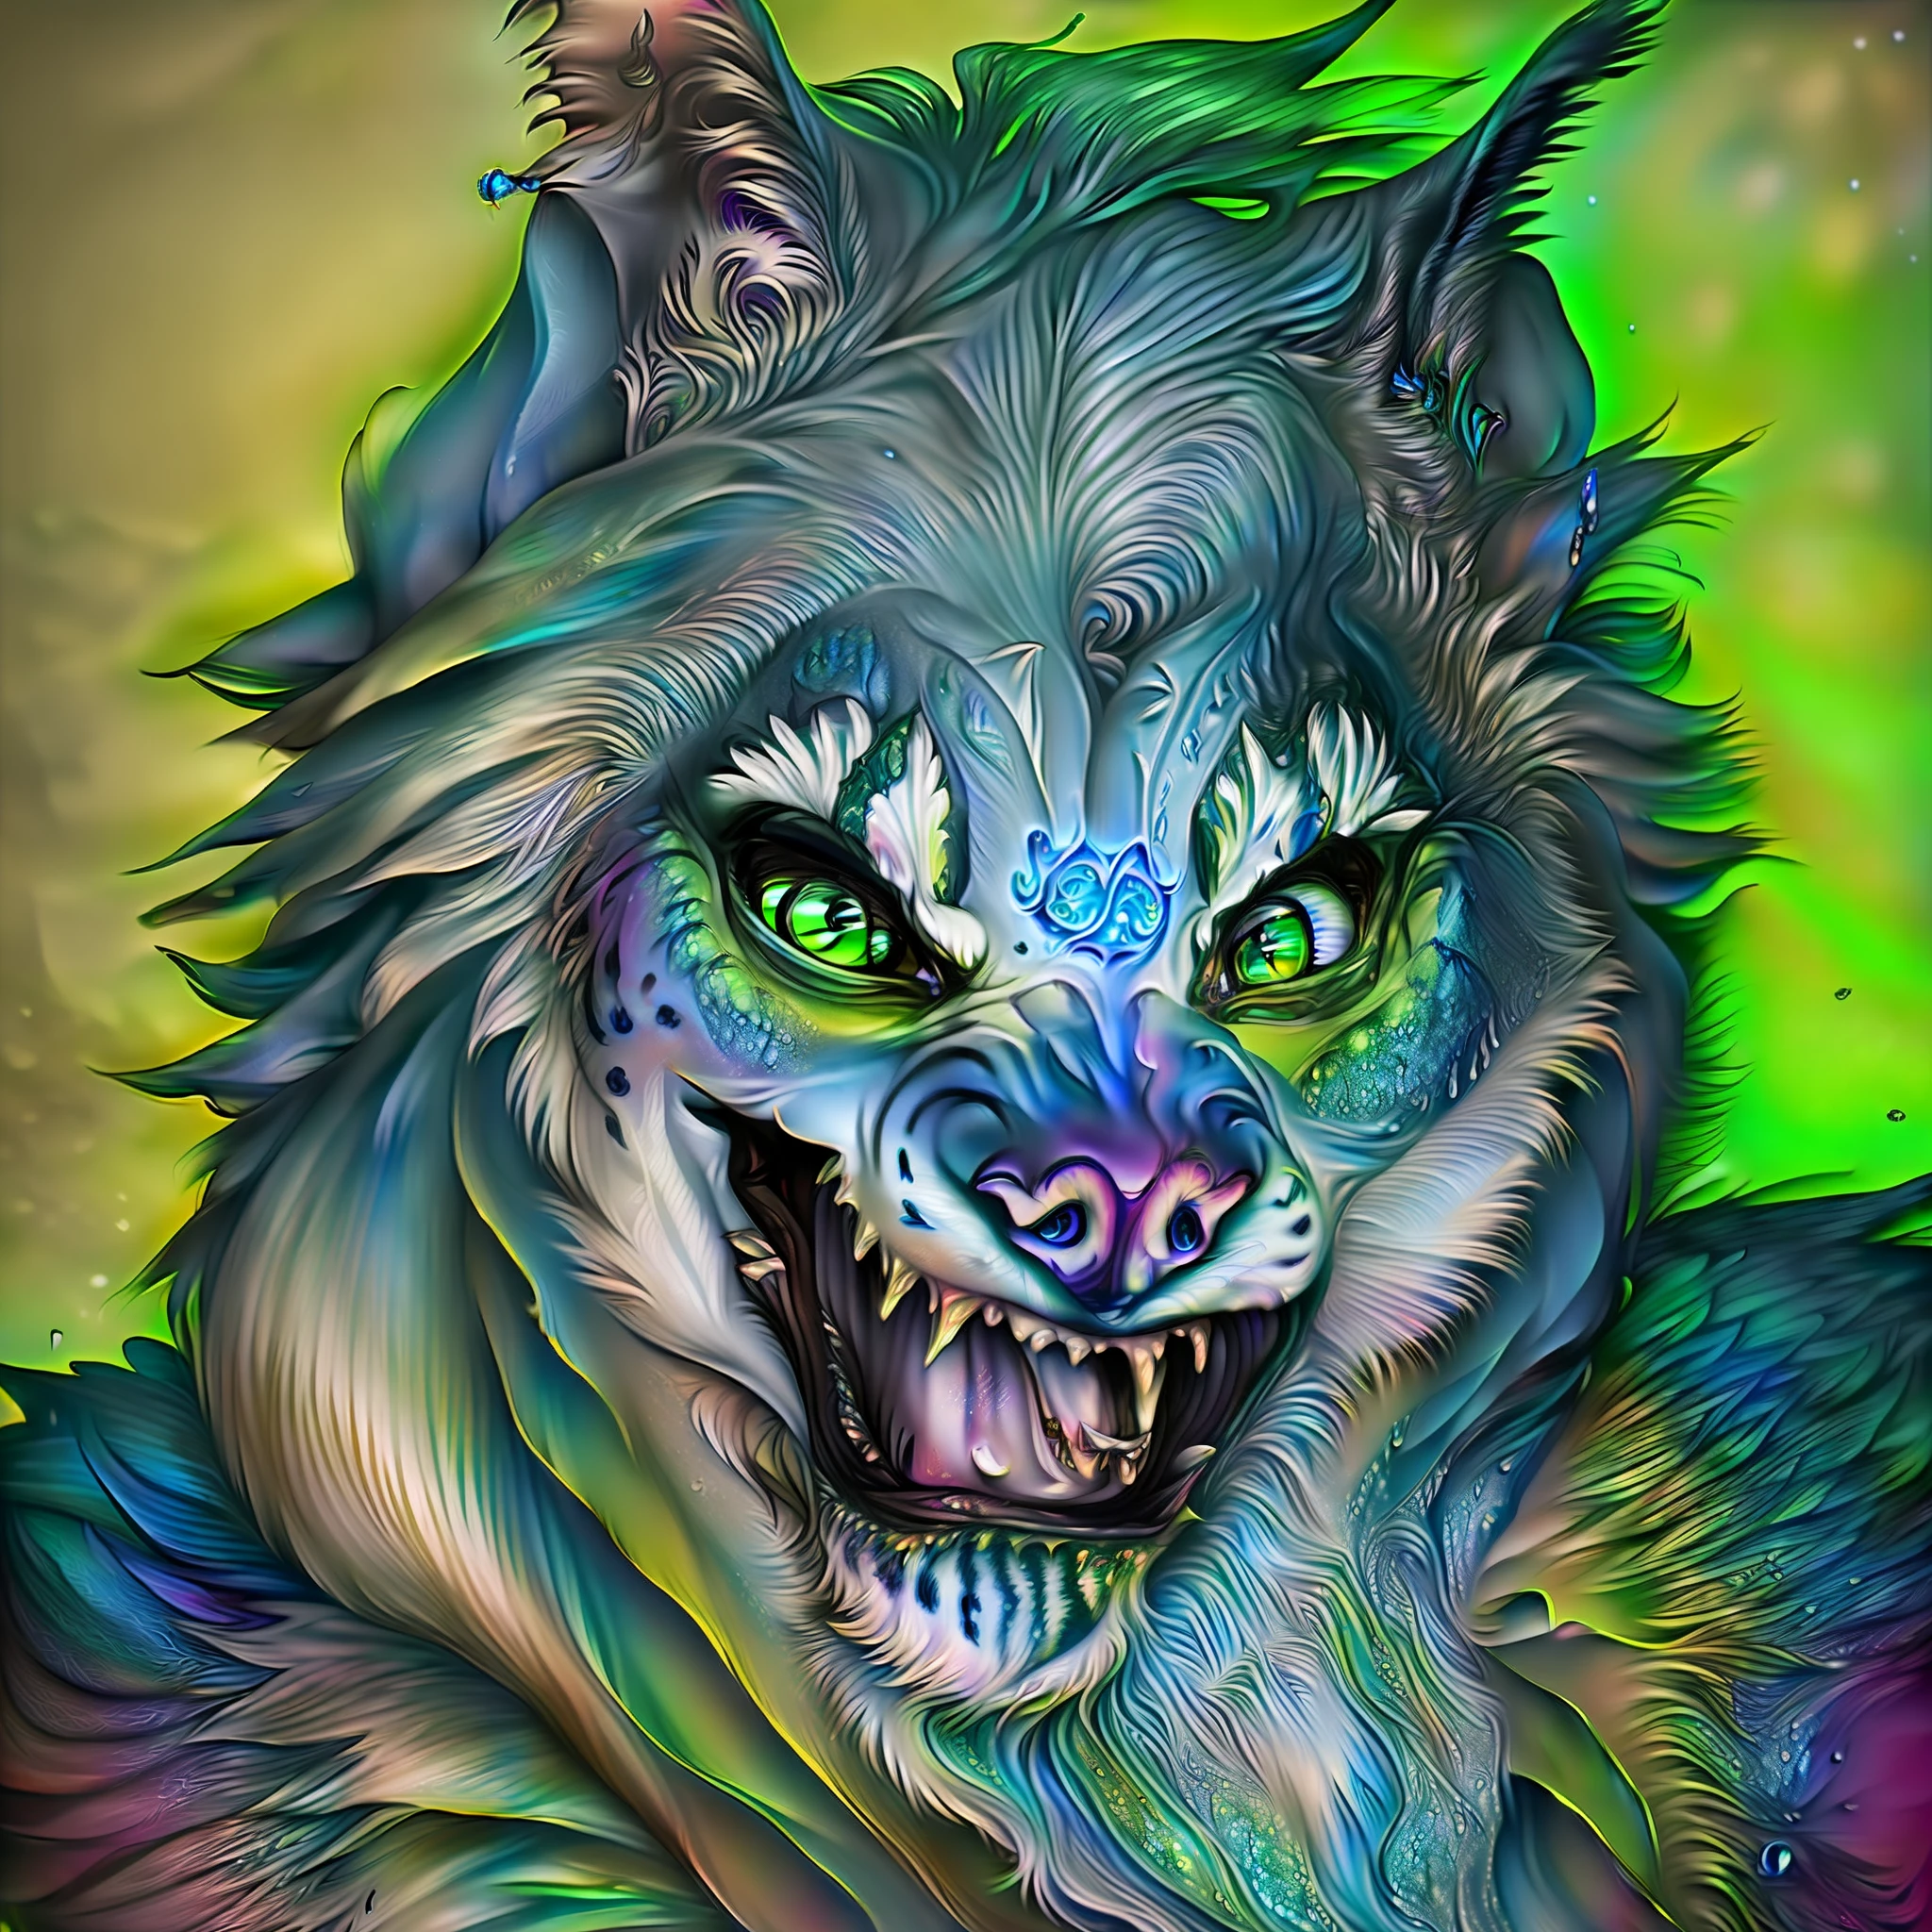 (шедевр, лучшее качество), spotted hyena, protruding tongue, head, portrait of animal, blue-green Mohawk, psycho smile, evil look, 8 fangs, fluffy ears, drawing, tattoo,